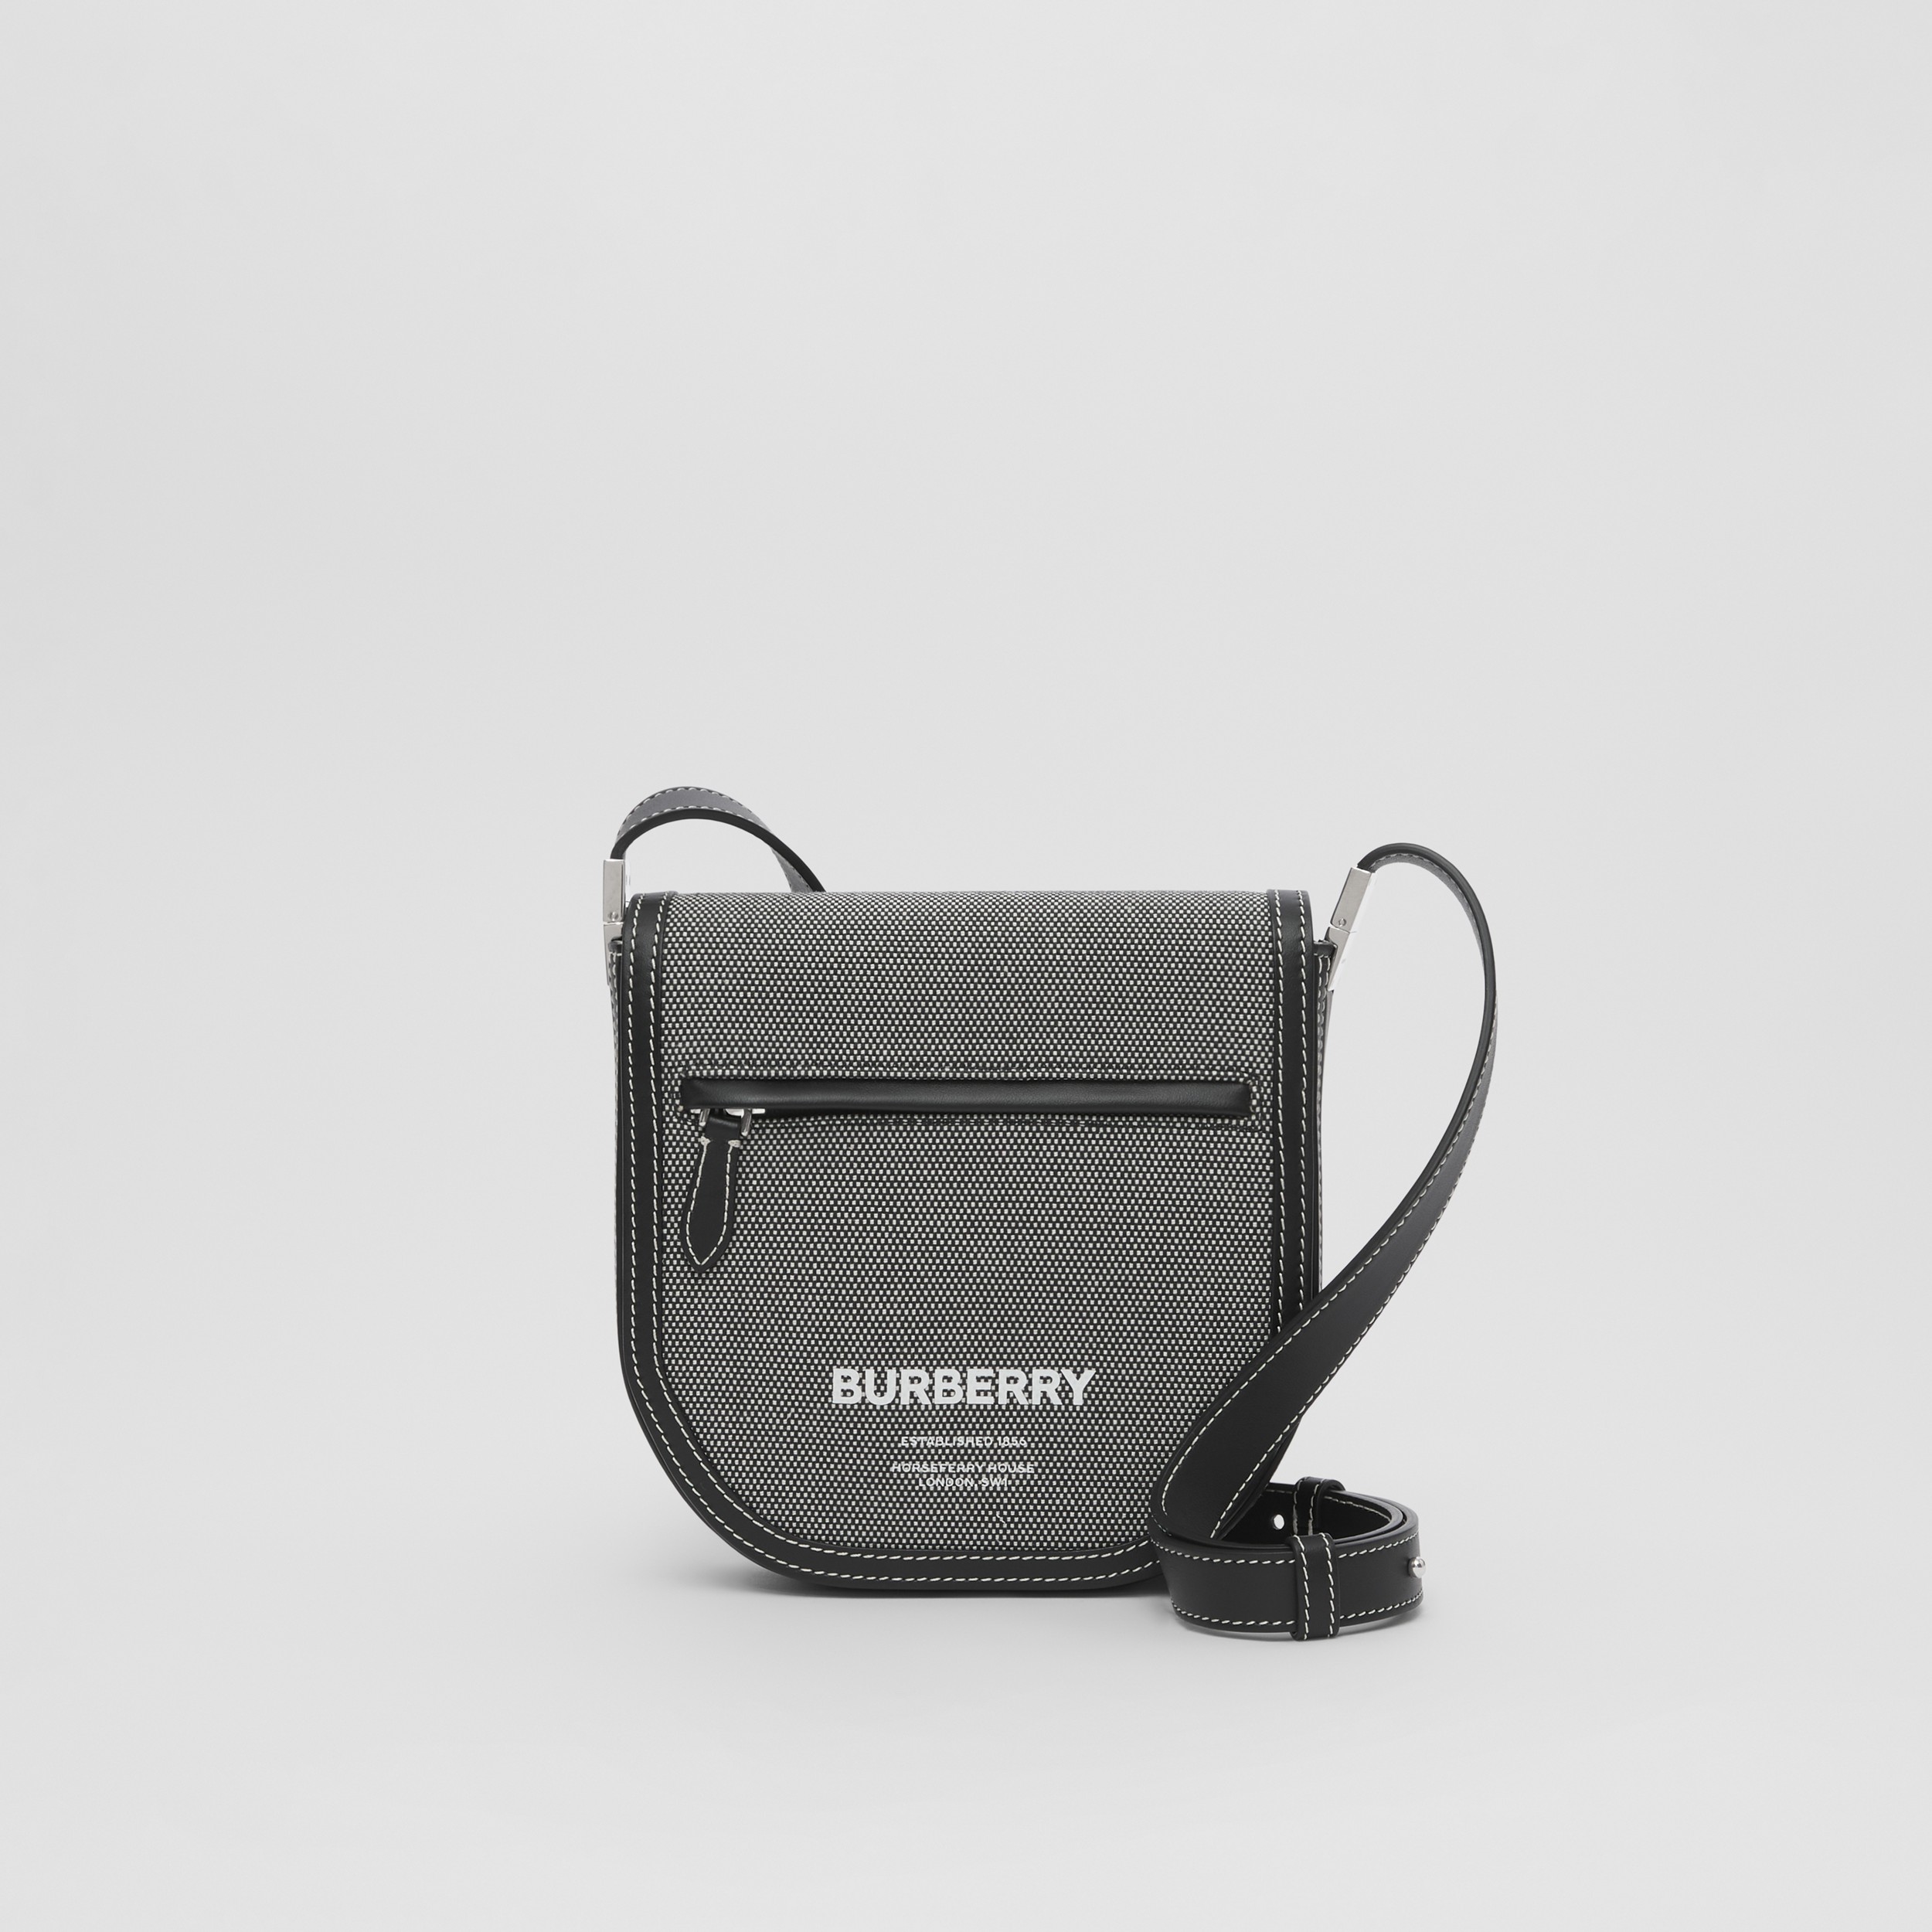 Mini-Crossbody-Tasche „Olympia“ aus Baumwolle mit Horseferry-Schriftzug (Schwarz/grau) | Burberry® - 1